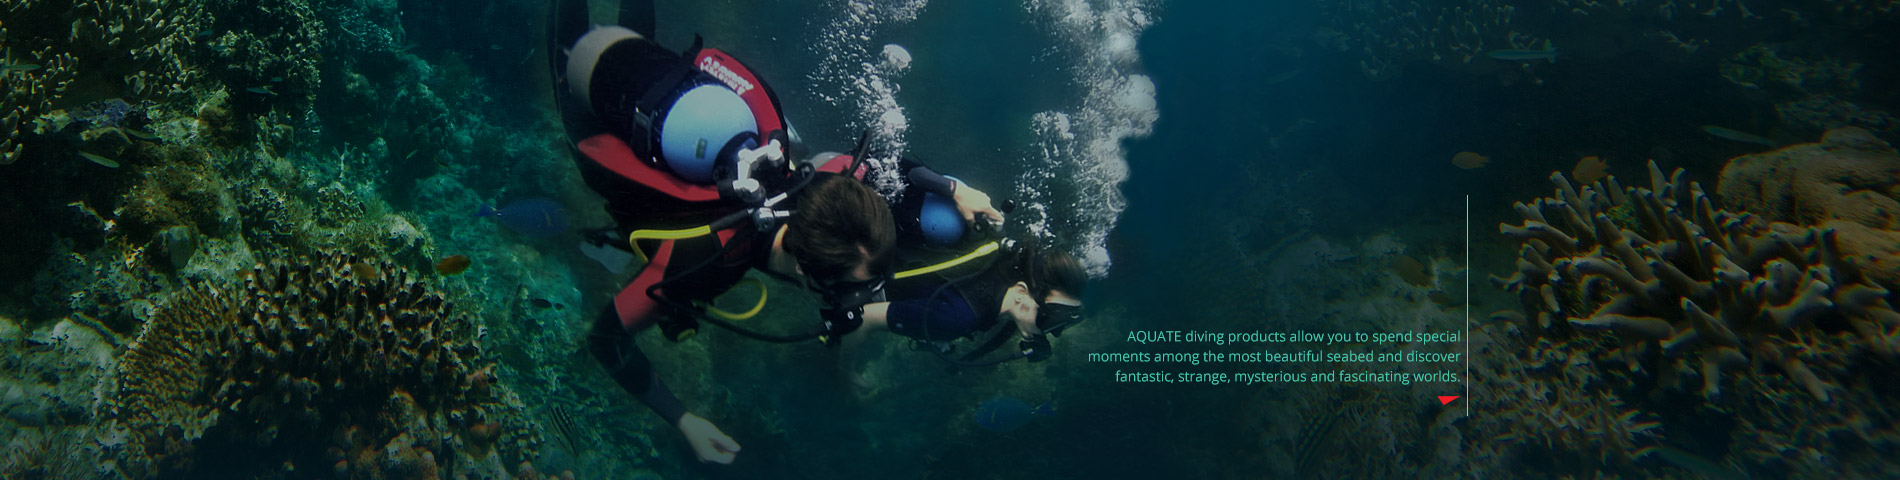 AQUATEC Produk inovatif untuk olahraga menyelam